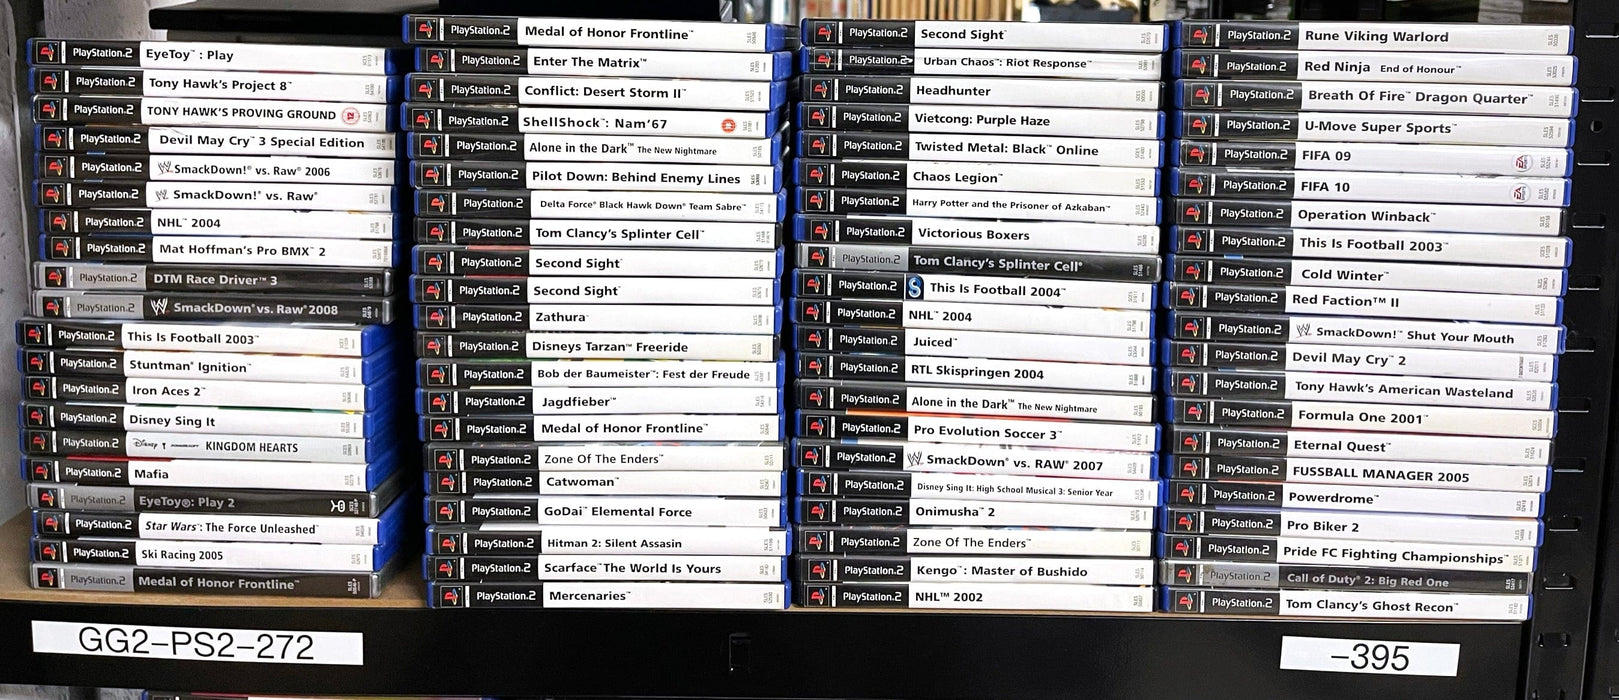 Glaciergames PlayStation 2 Game King Arthur PlayStation 2 (Nr.1008)